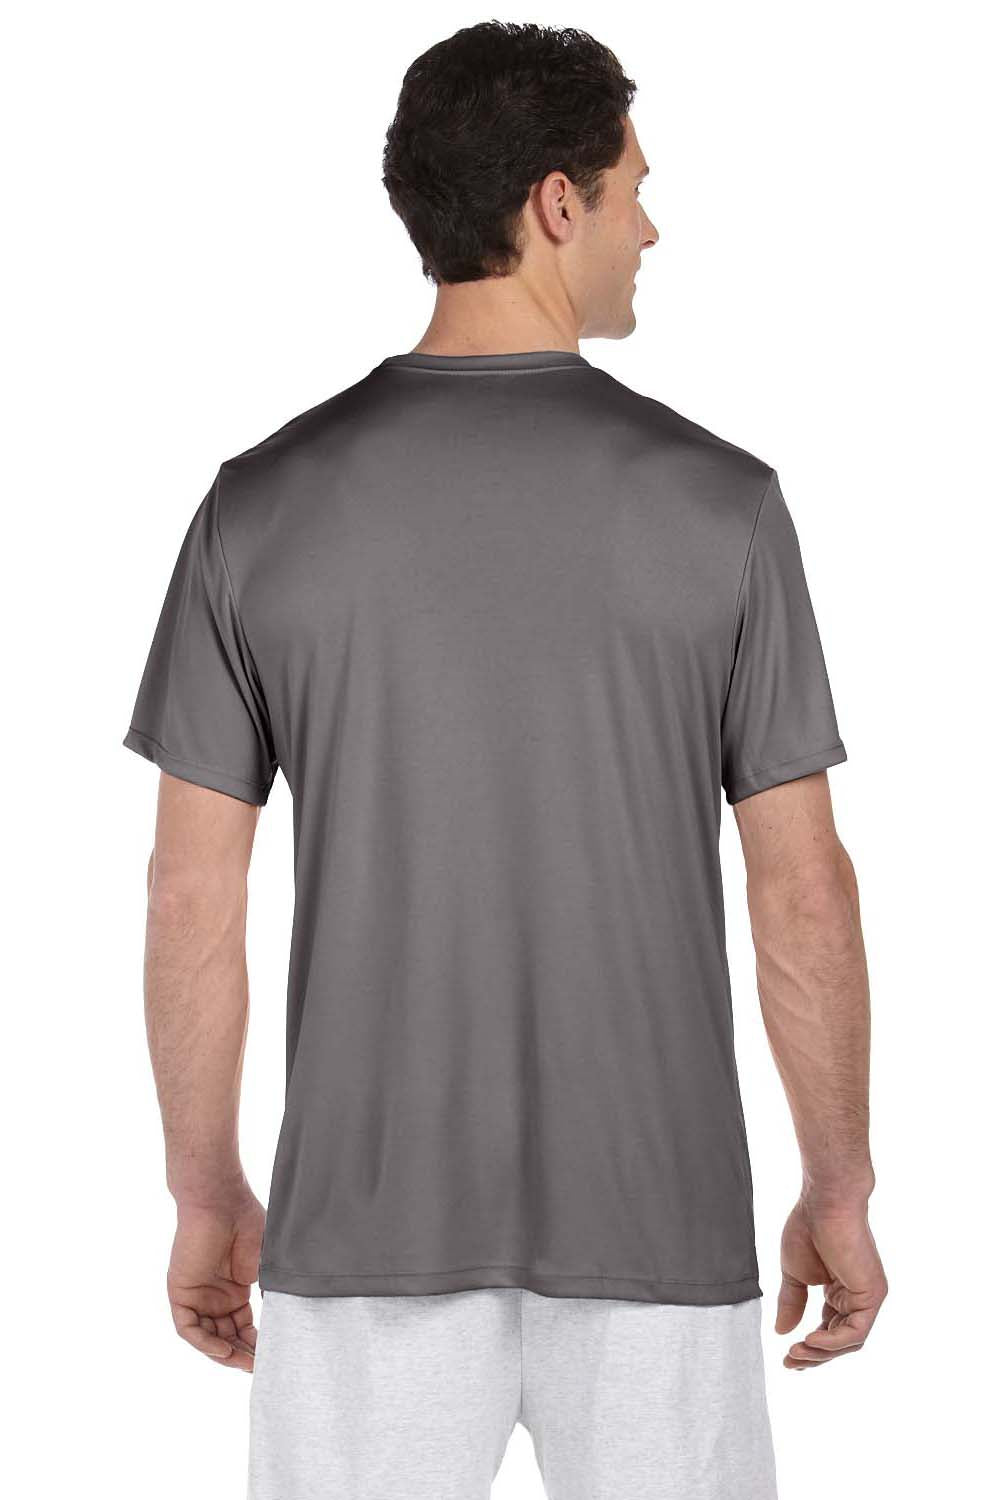 Hanes 4820 Mens Cool DRI FreshIQ Moisture Wicking Short Sleeve Crewneck T-Shirt Graphite Grey Back